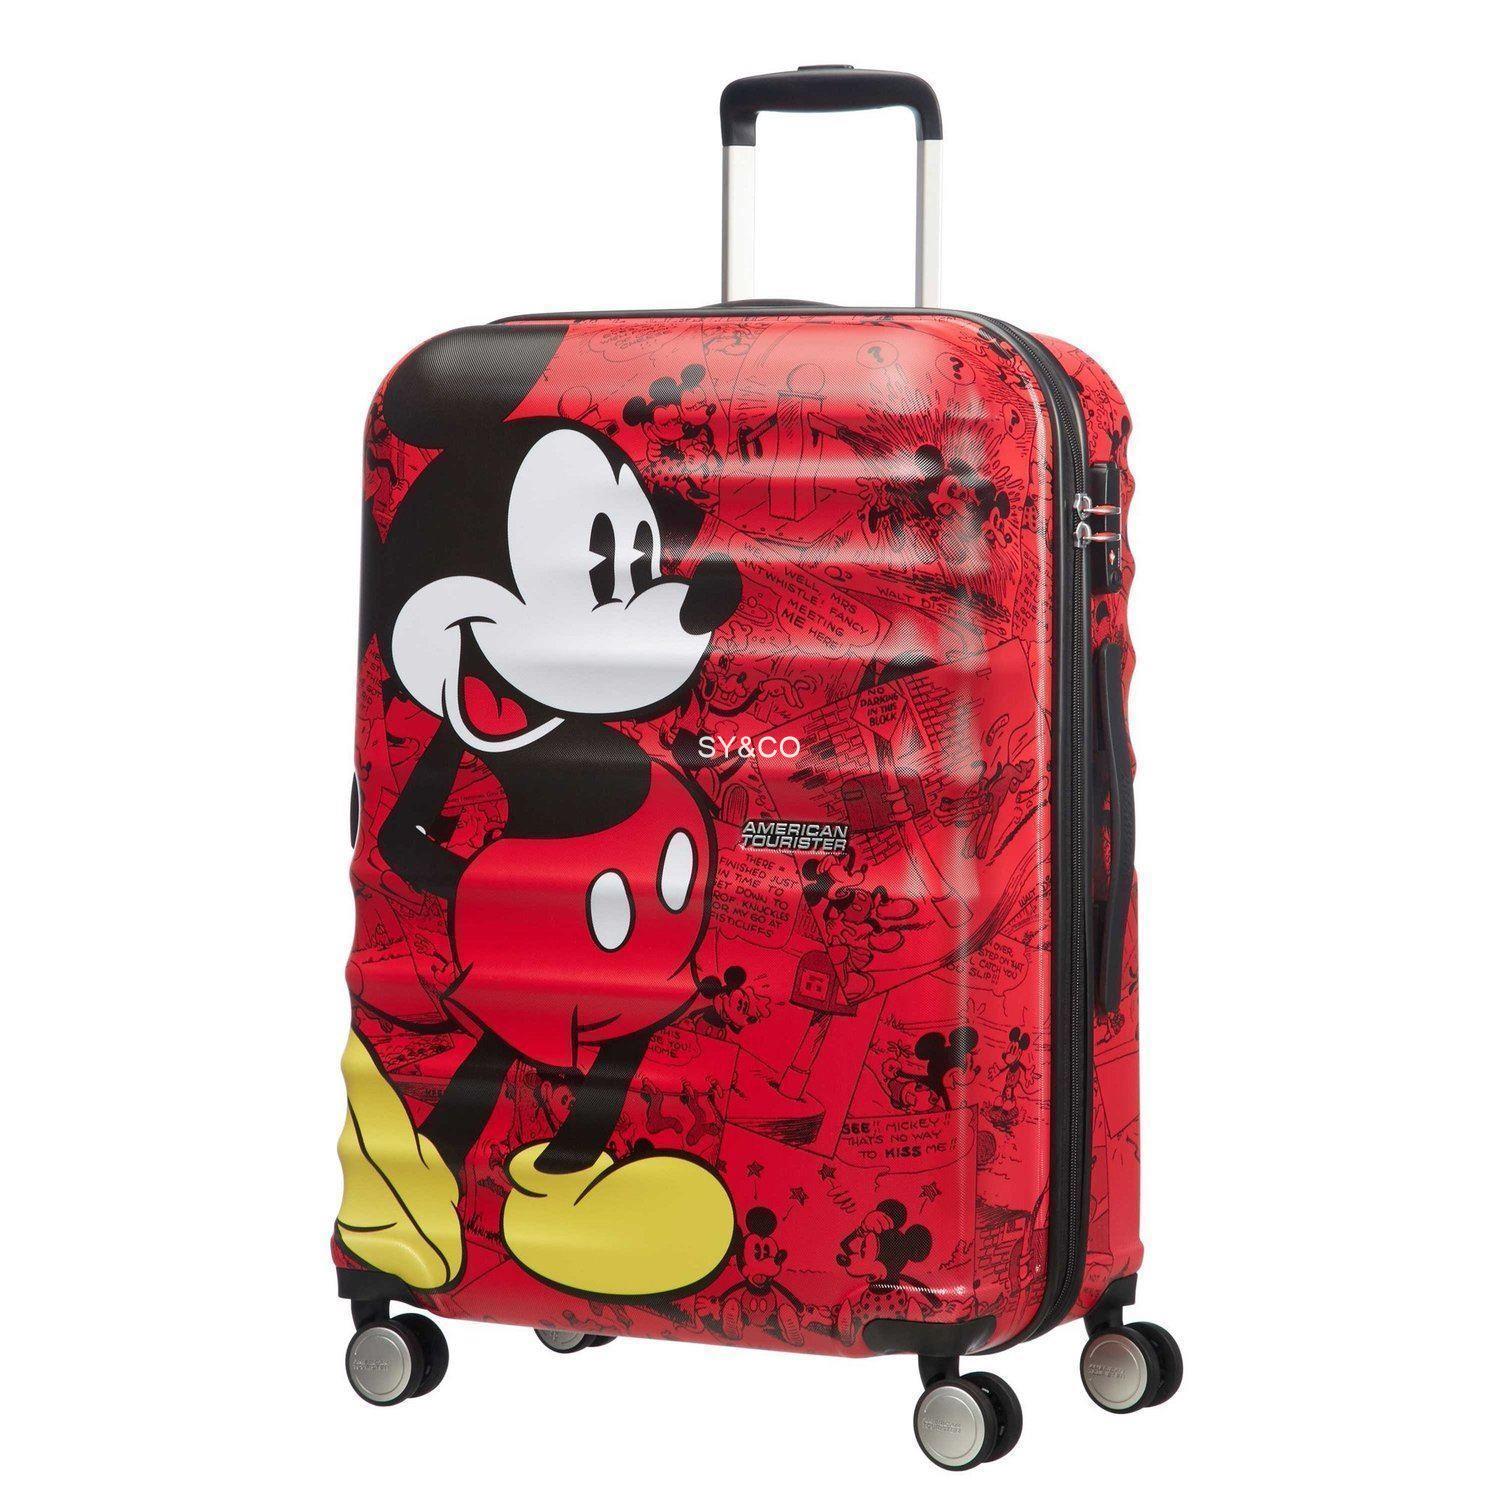 Maleta cabina Disney AMERICAN TOURISTER Mickey comic 55cm - Imagen 1